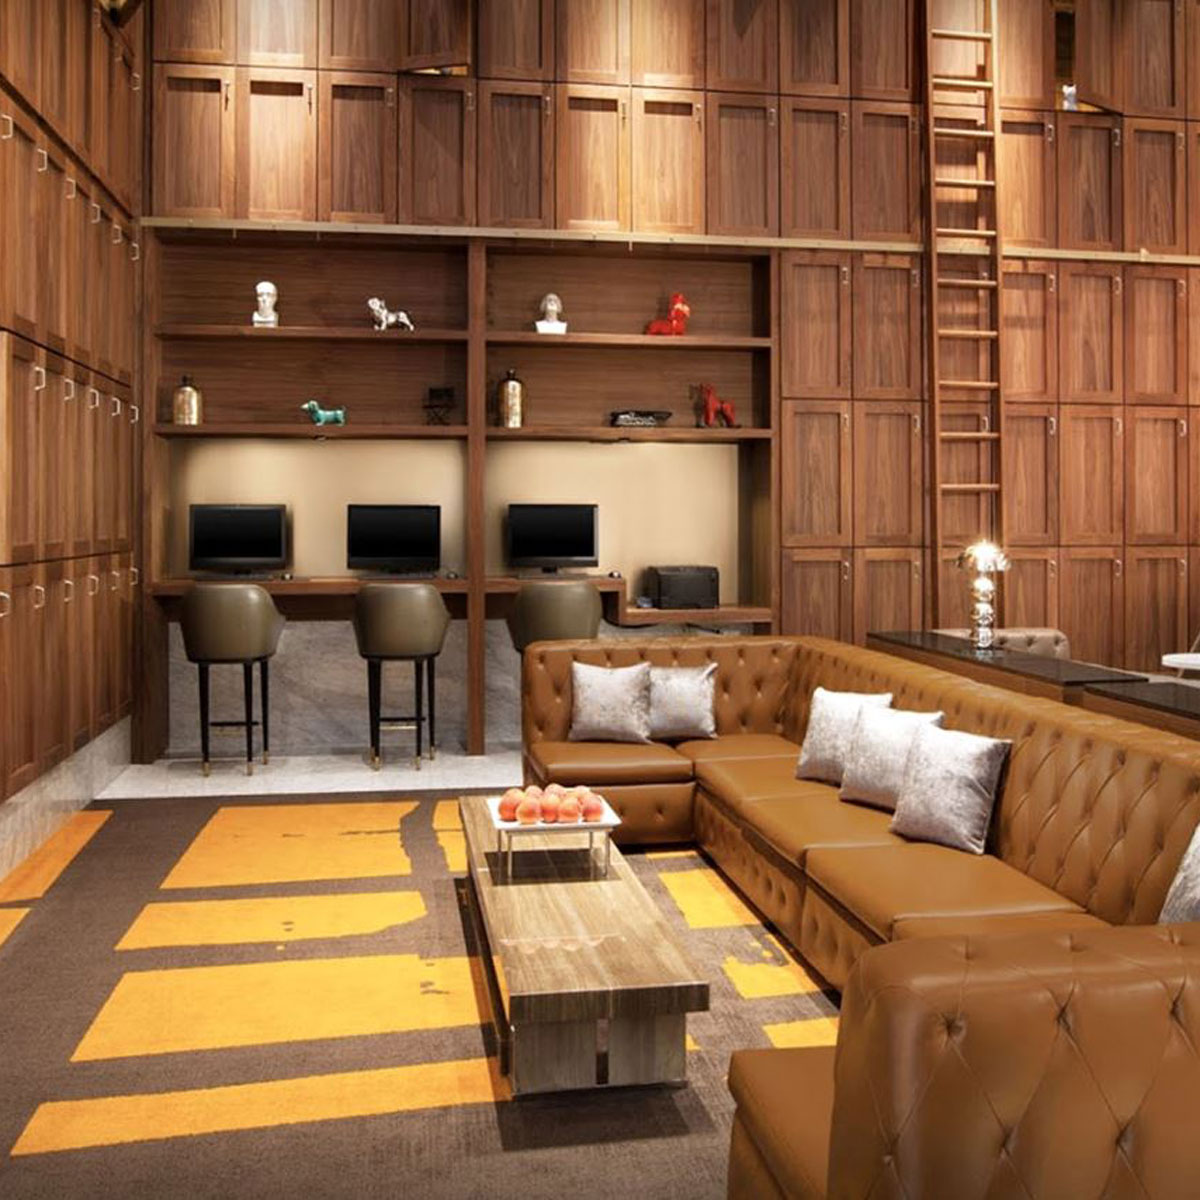 Hospitality casegoods - Contraxx Customer Hospitality Furniture Designers Library